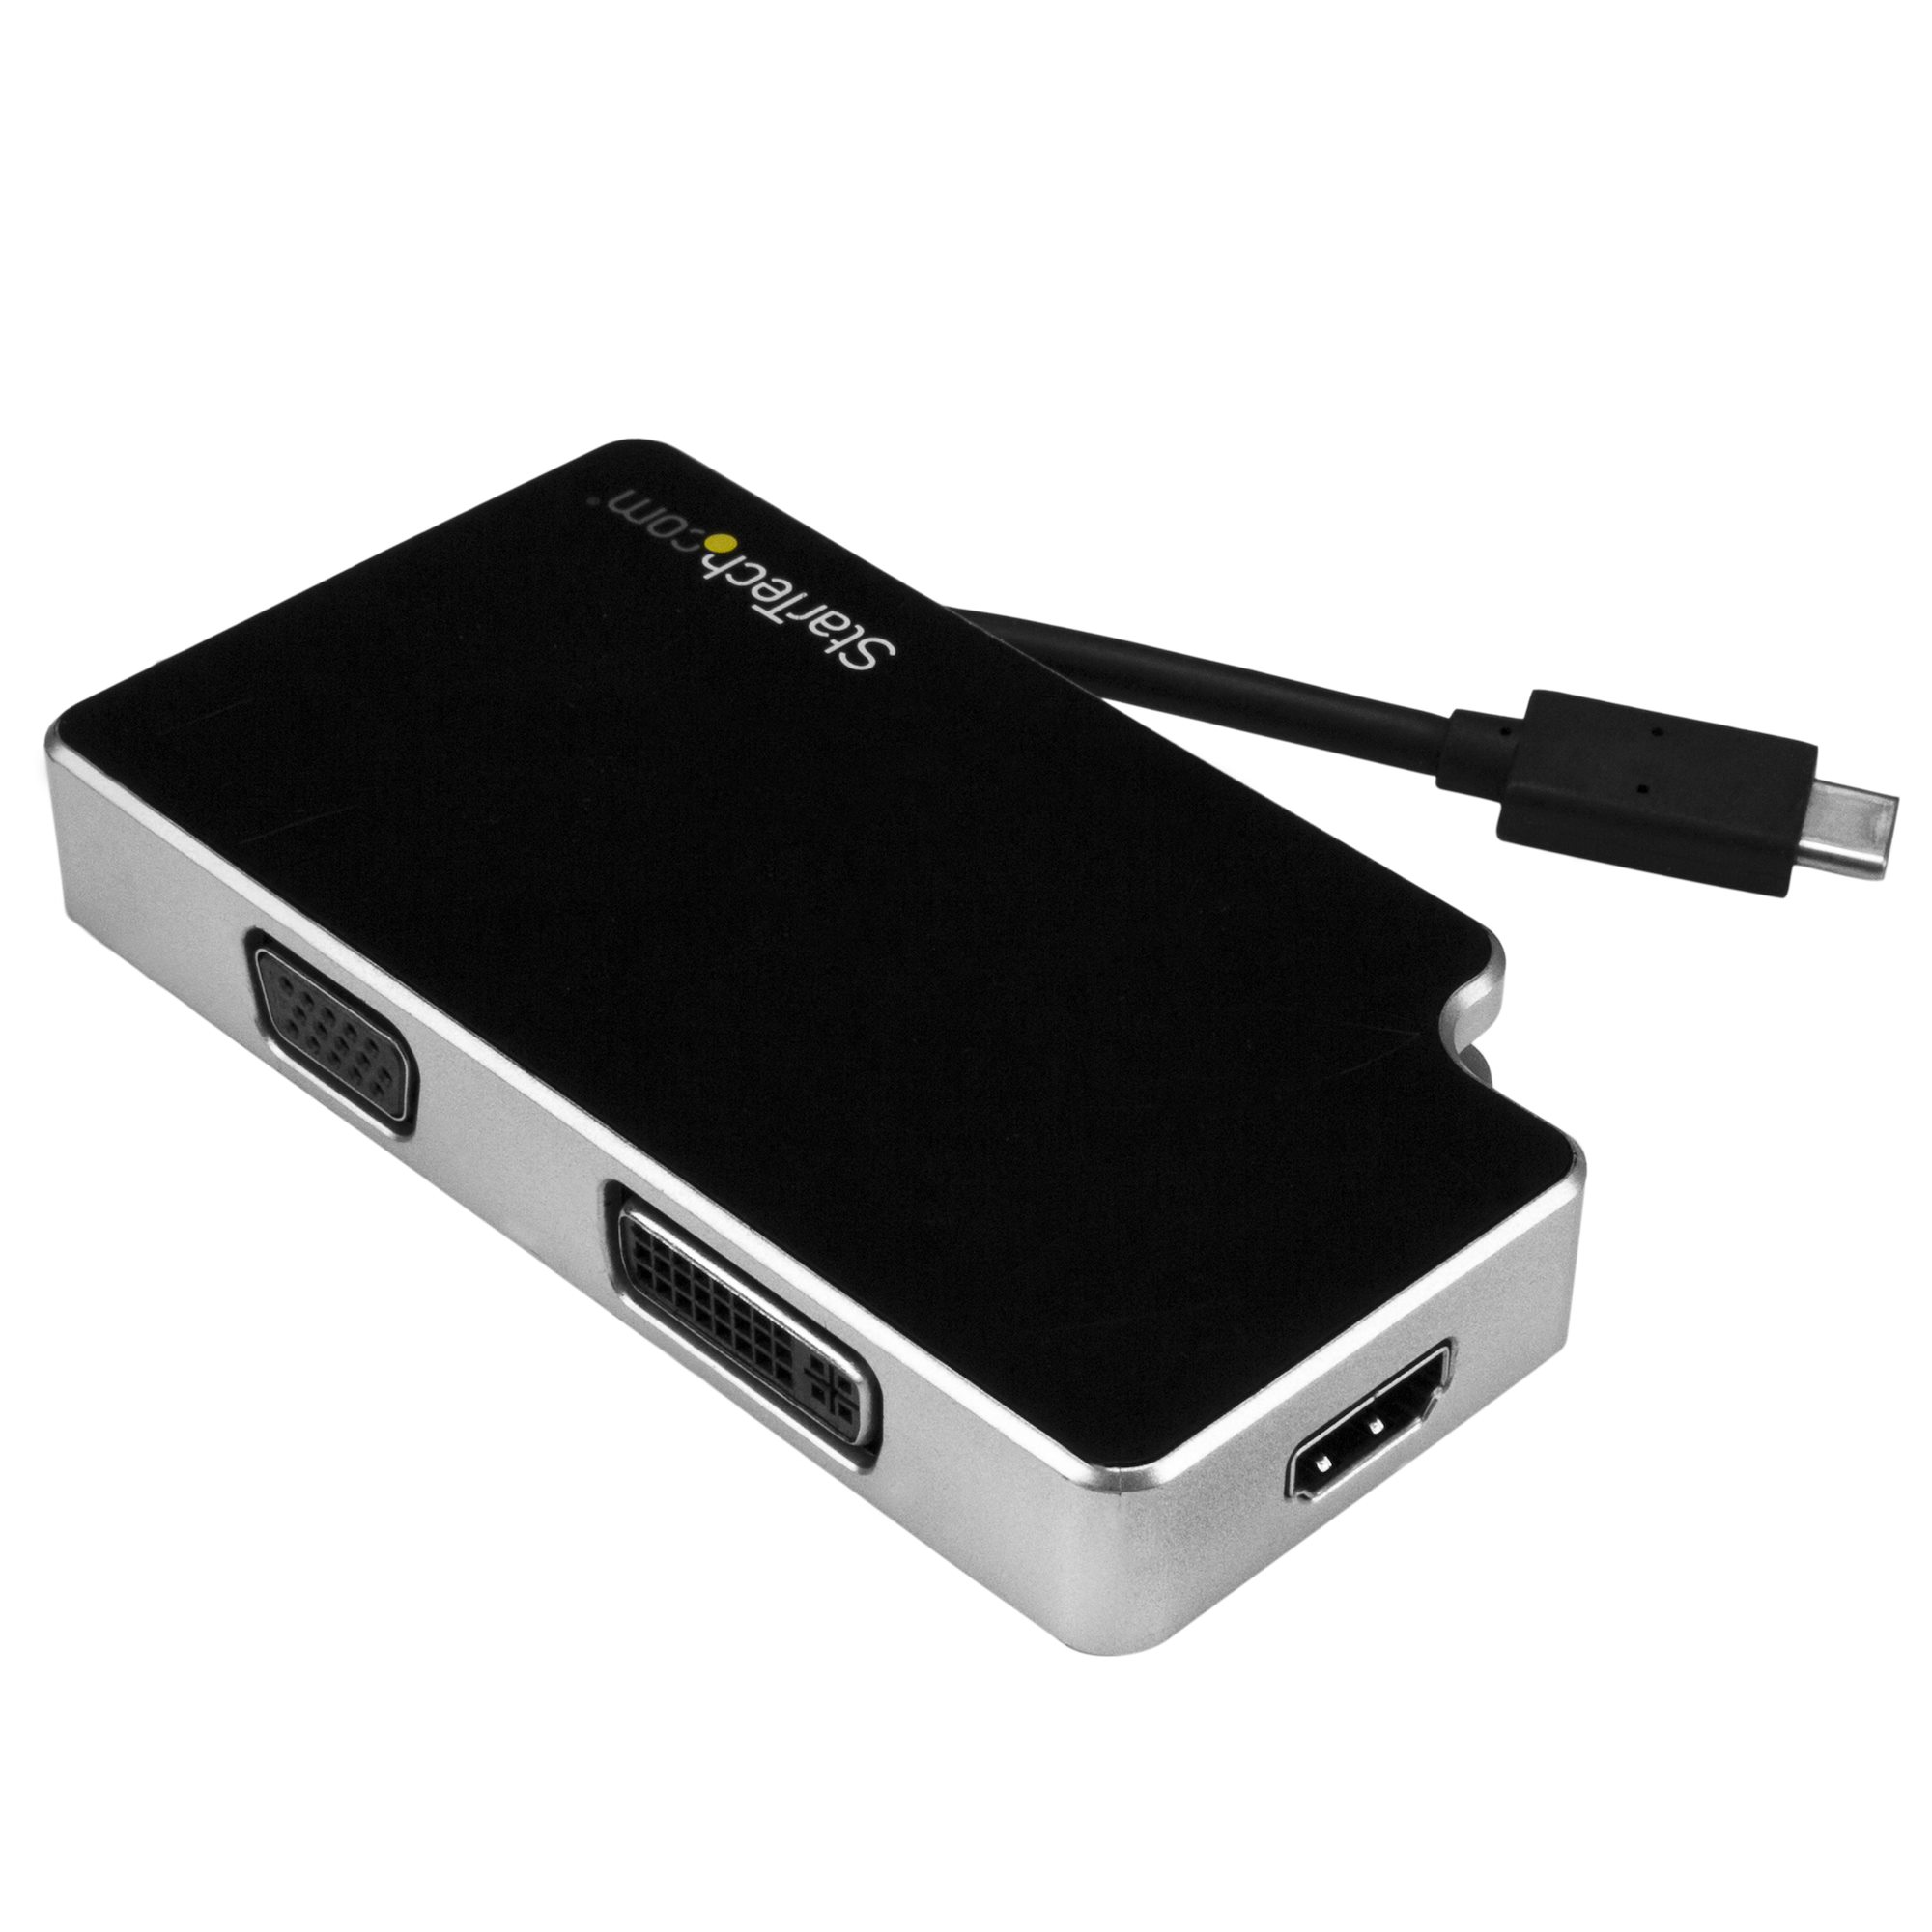 HDMI変換アダプター 3in1 4K映像 軽量設計 Type-C HDMI USB3.0 変換アダプタ 3in1仕様 プロジェクター スクリーン 多機能性 PC接続 プレゼン 互換性 ハブ 変換 小型 急速 充電 変換アダプター ハブ変換 3-in-1 解像度 MacBook 対応 4K  HDMIポート iPad アダプターハブ